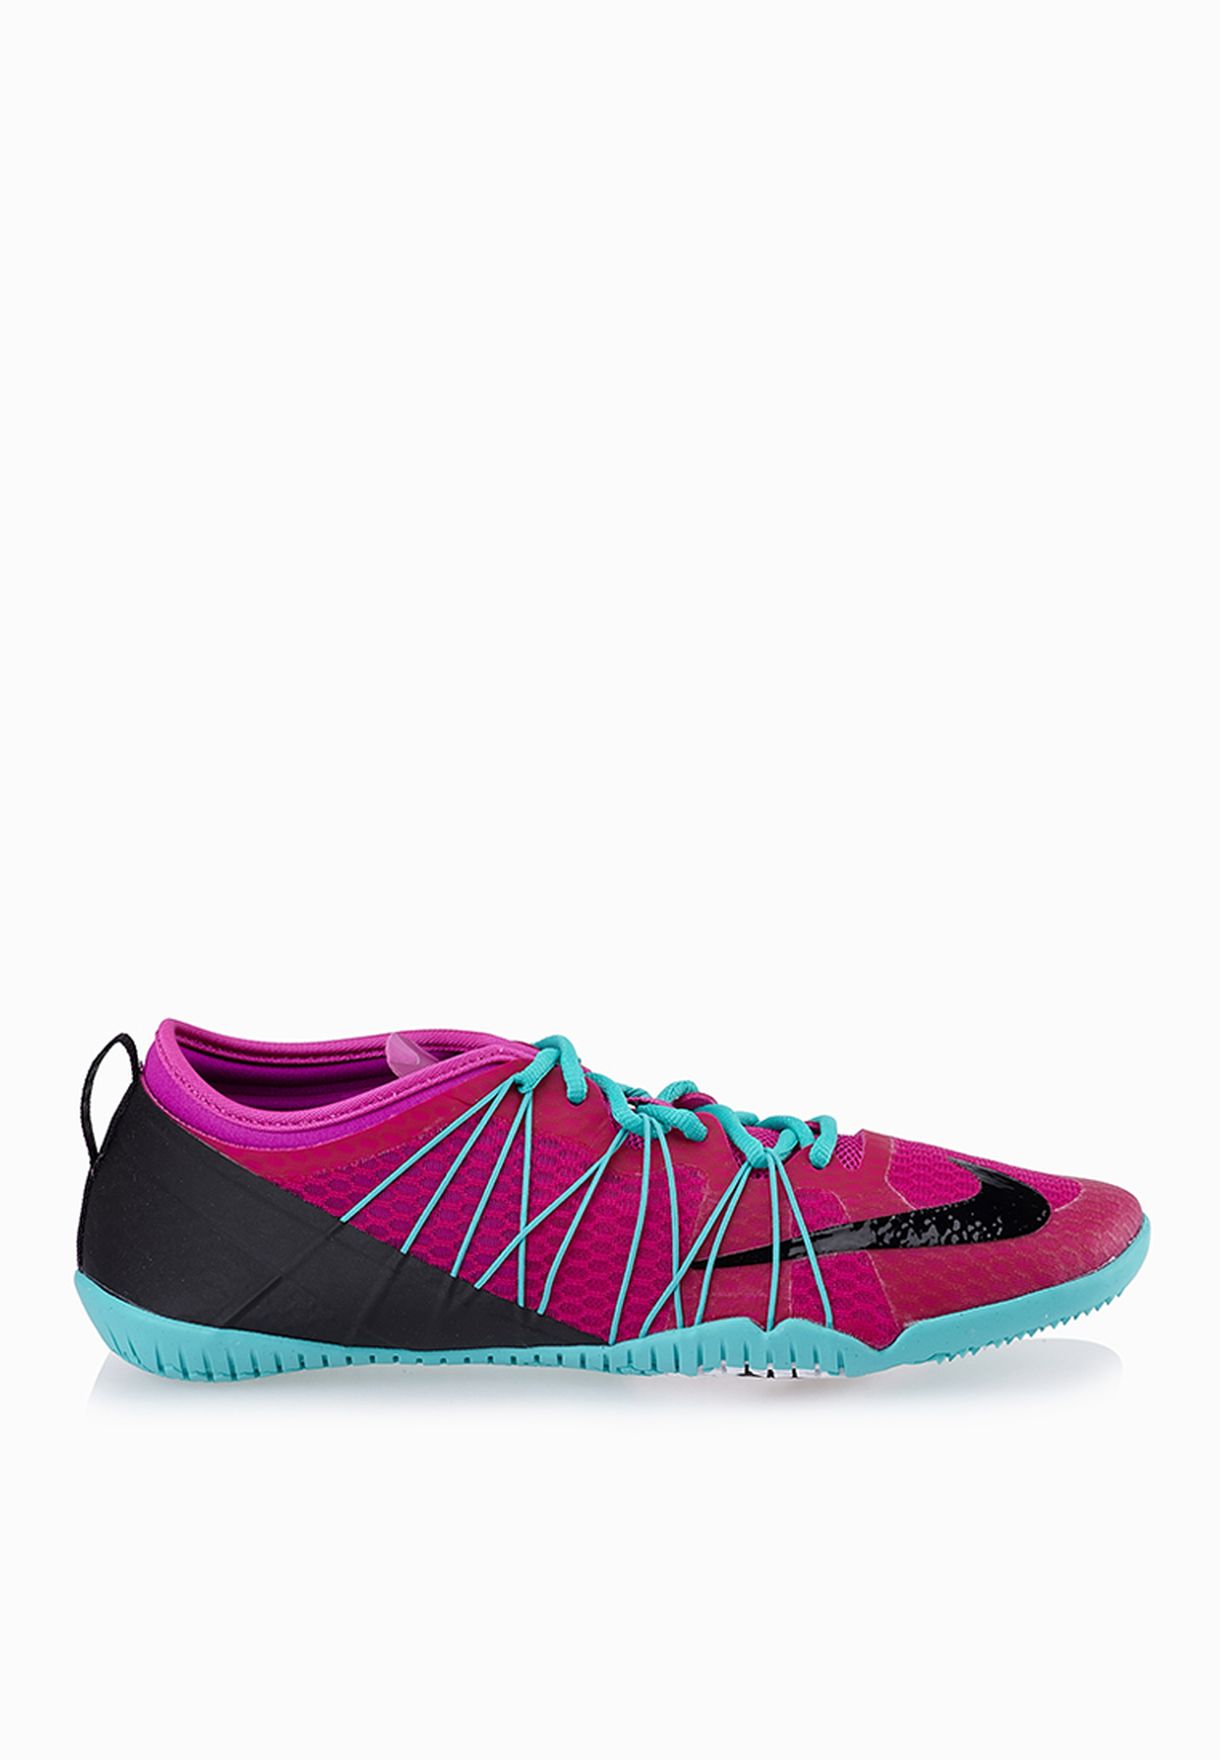 empezar estafa Acostado Buy Nike purple Free 1.0 Cross Bionic 2 for Women in MENA, Worldwide